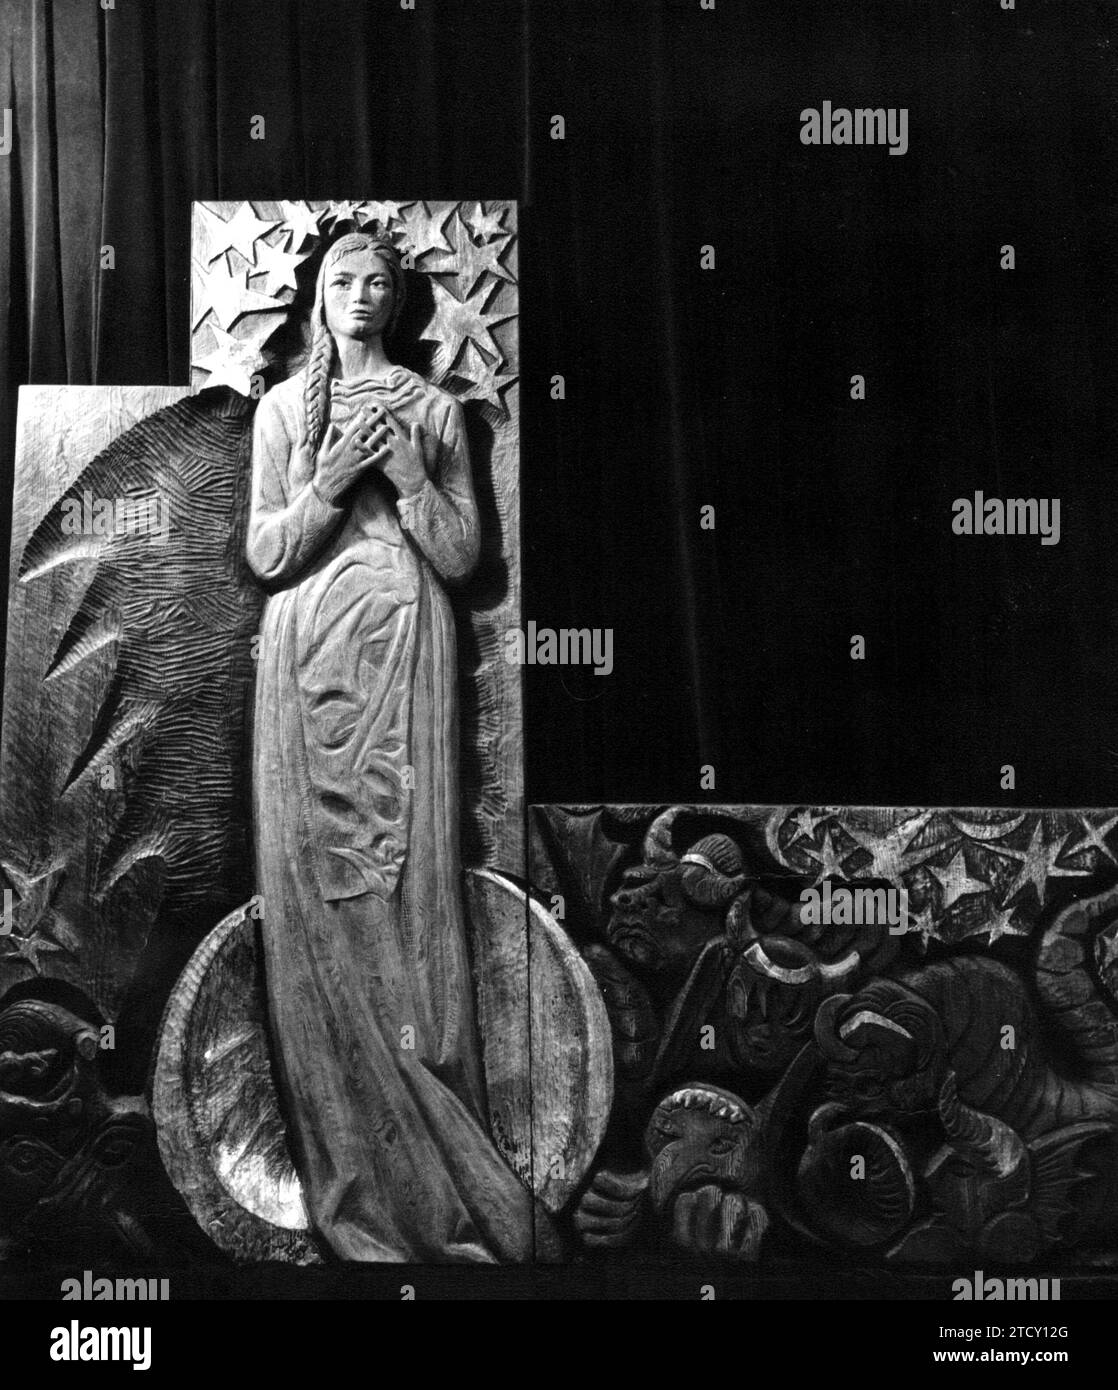 12/31/1965. Wooden altarpiece by the sculptor Agustín de la Herrán Matorras, located in the church of Cervatos de Cueza (Palencia). Credit: Album / Archivo ABC / Alfonso Stock Photo